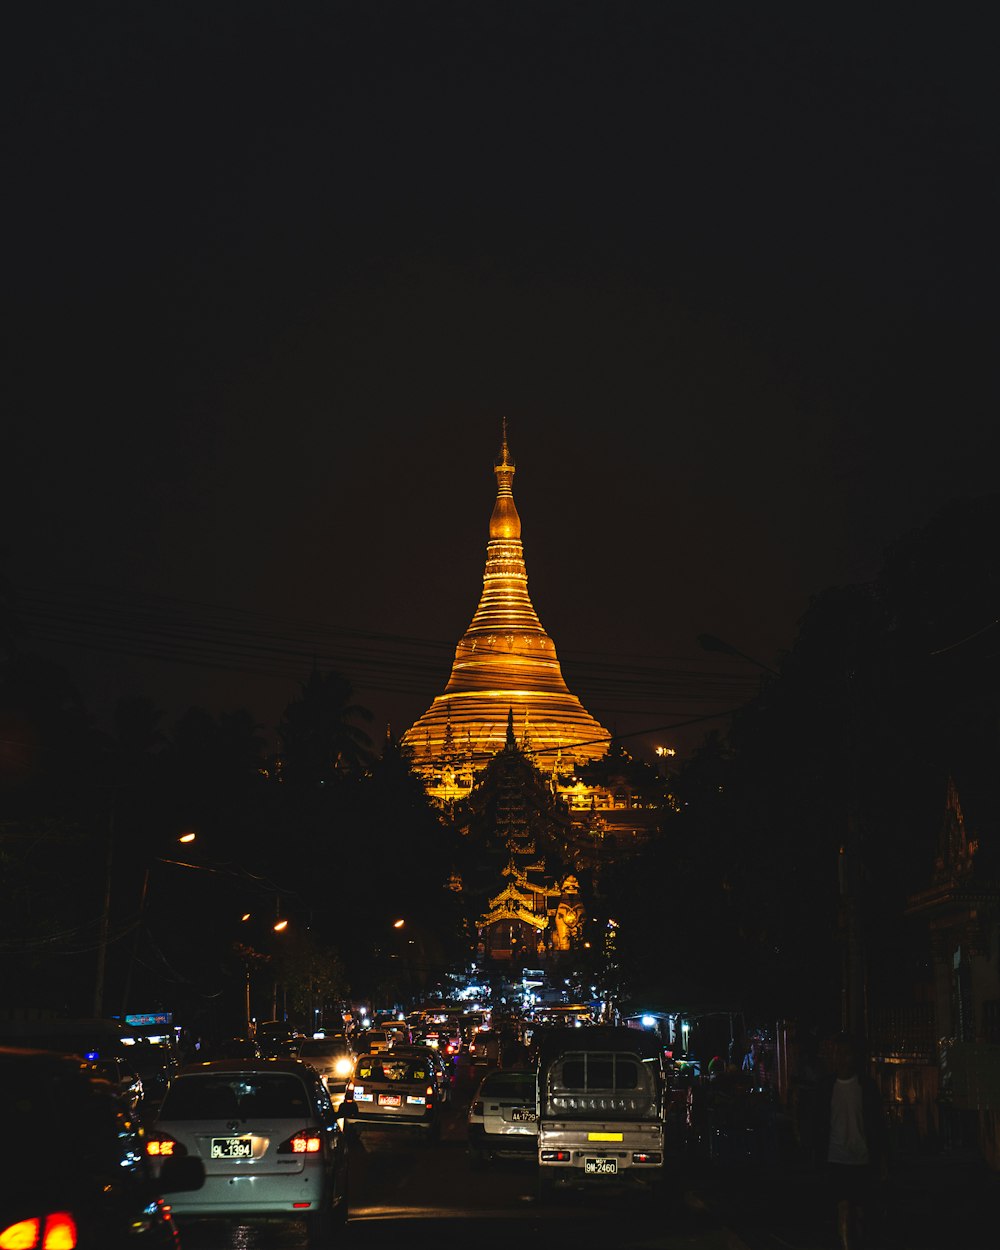 torre iluminada amarela durante a noite